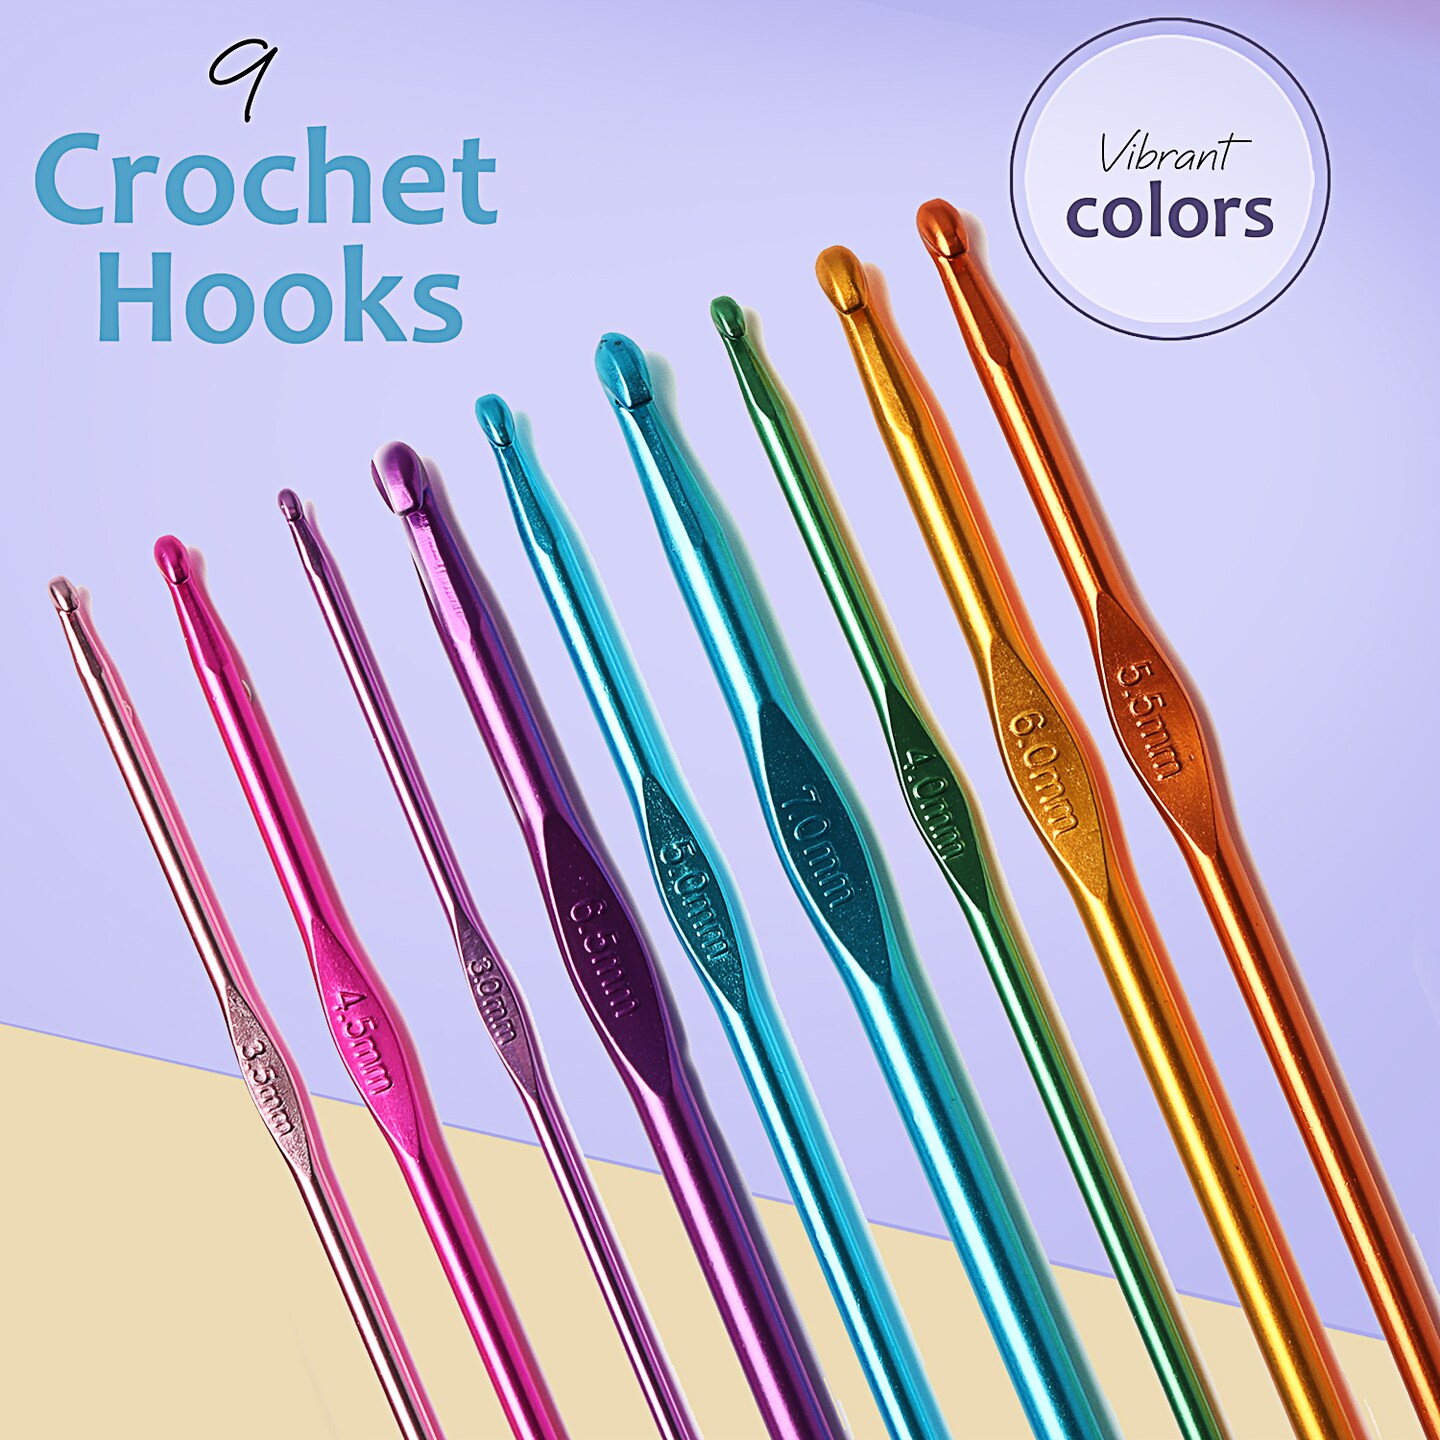 Crochet Counter, Crochet Hook Set with Crochet Needles and Accessories -  CraftBud